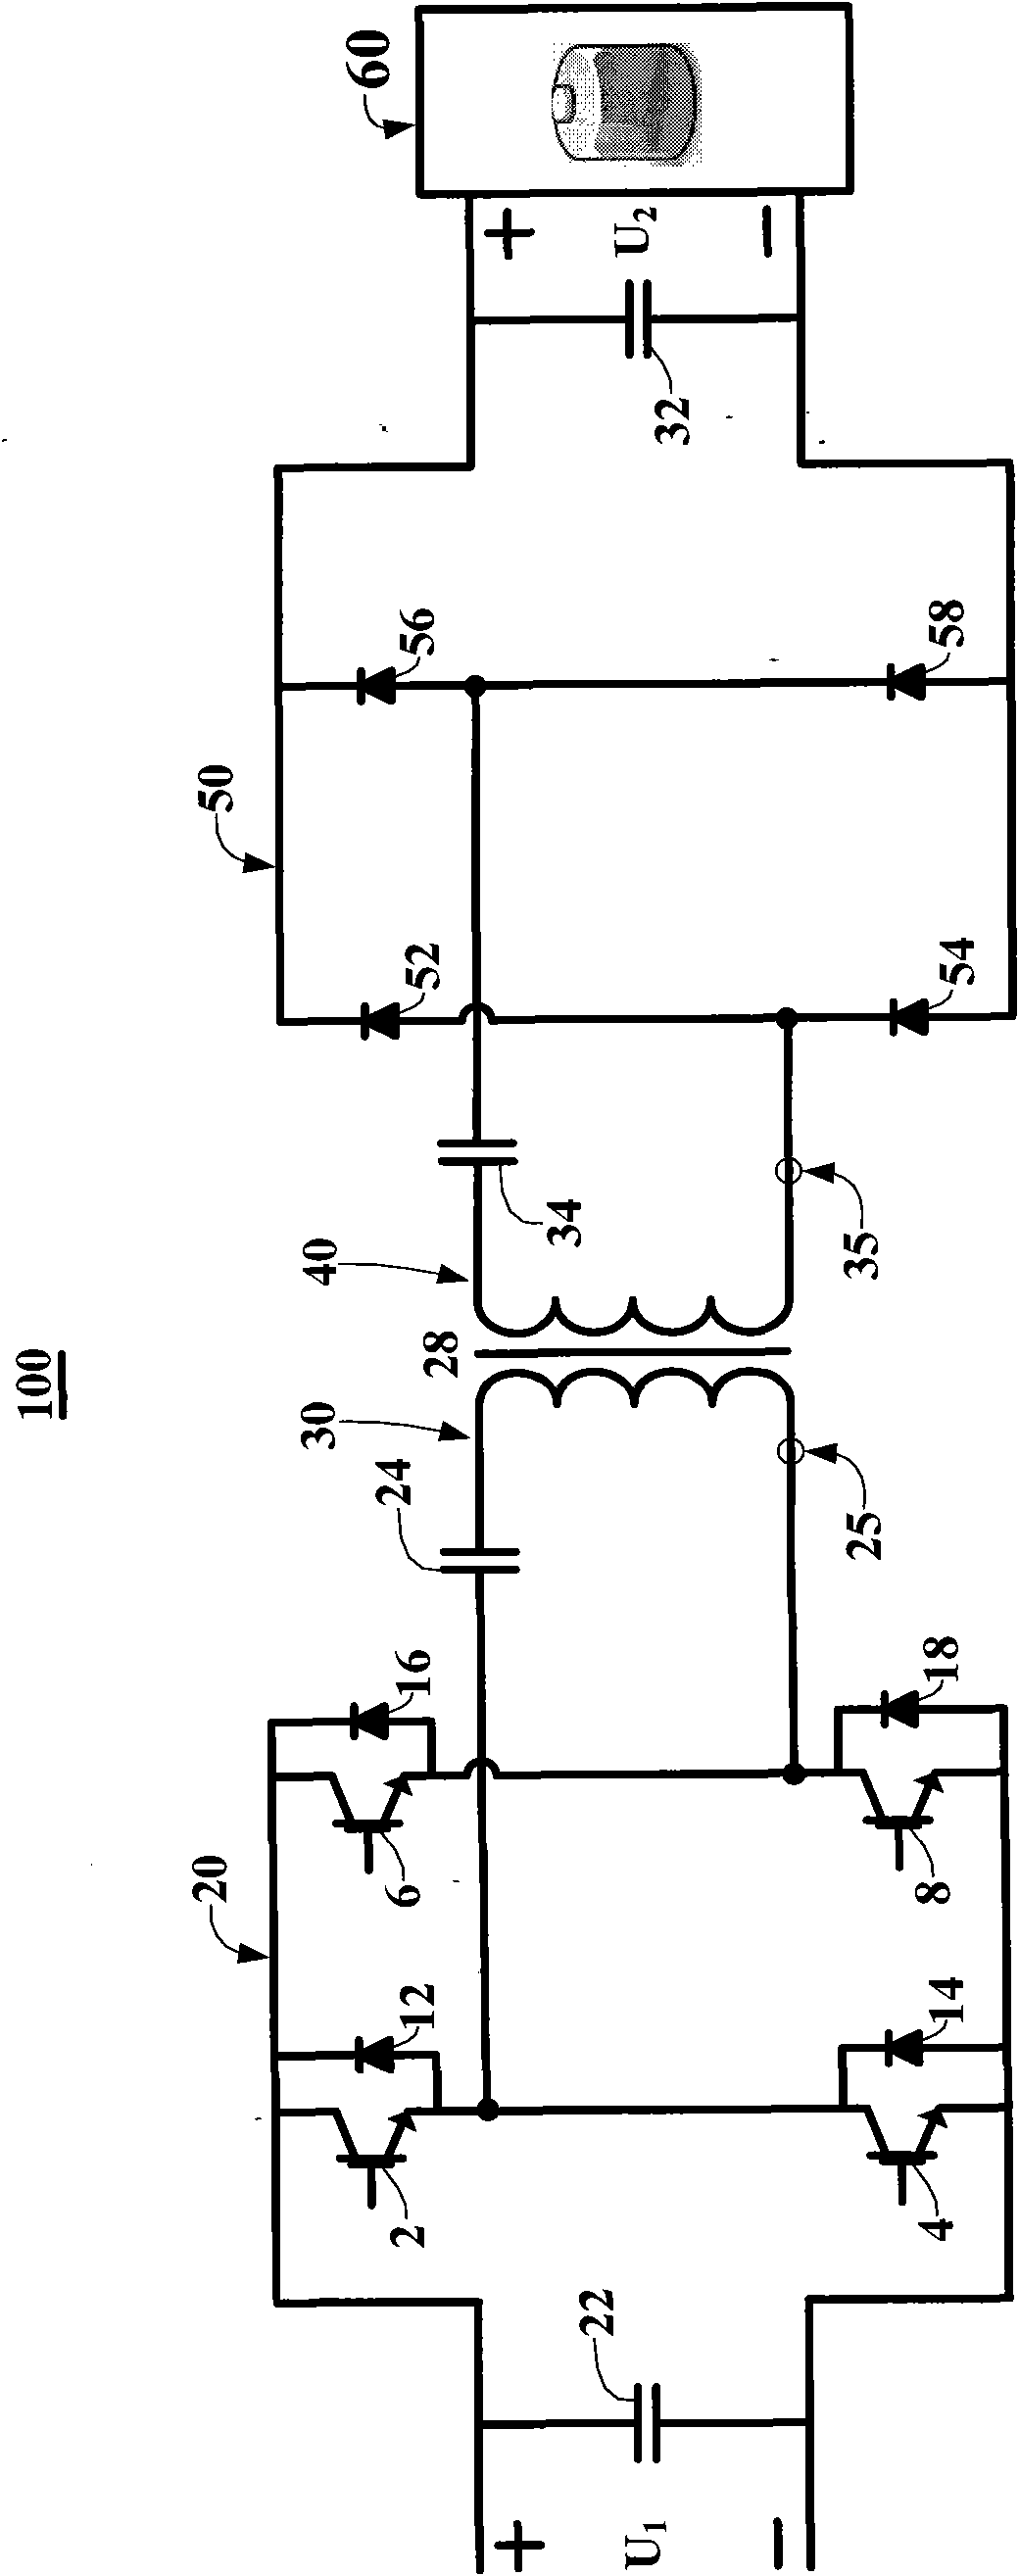 Bidirectionally isolating type series resonance DC/DC converter